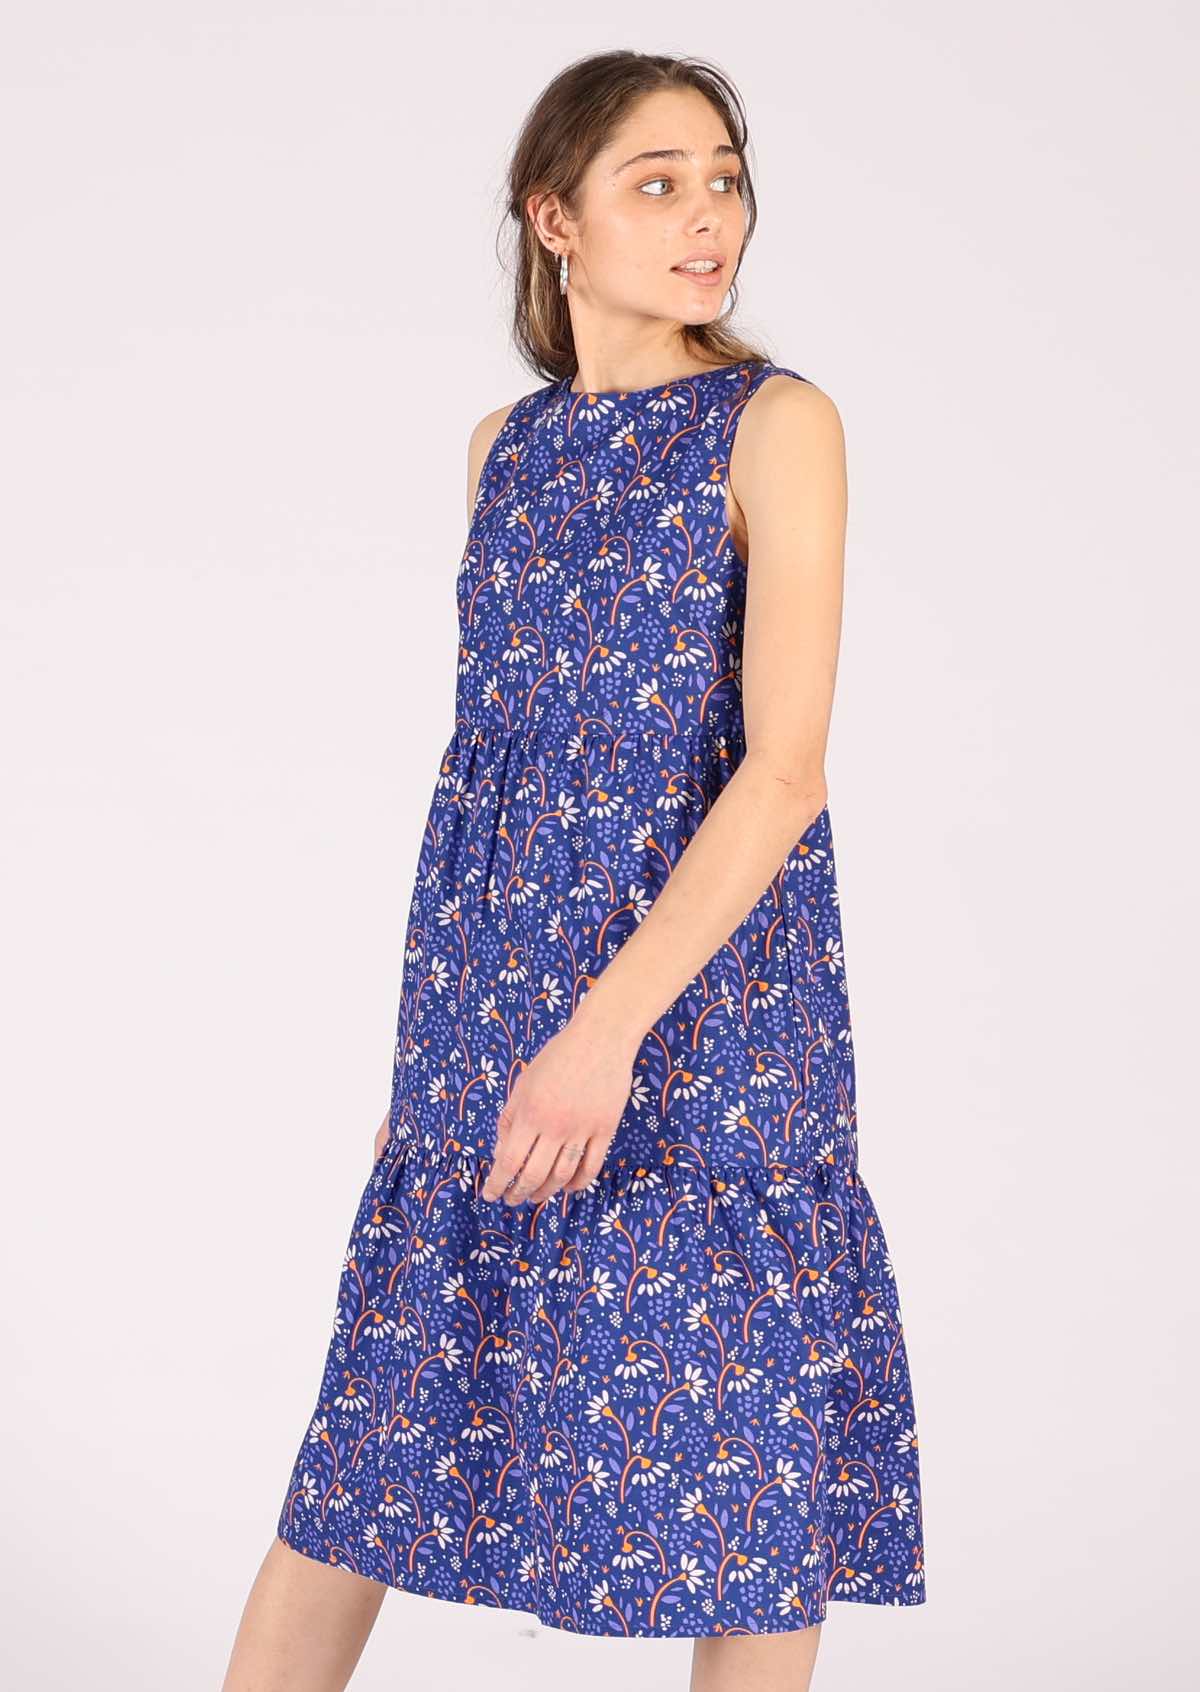 Shin length sleeveless cotton dress with fun daisy print